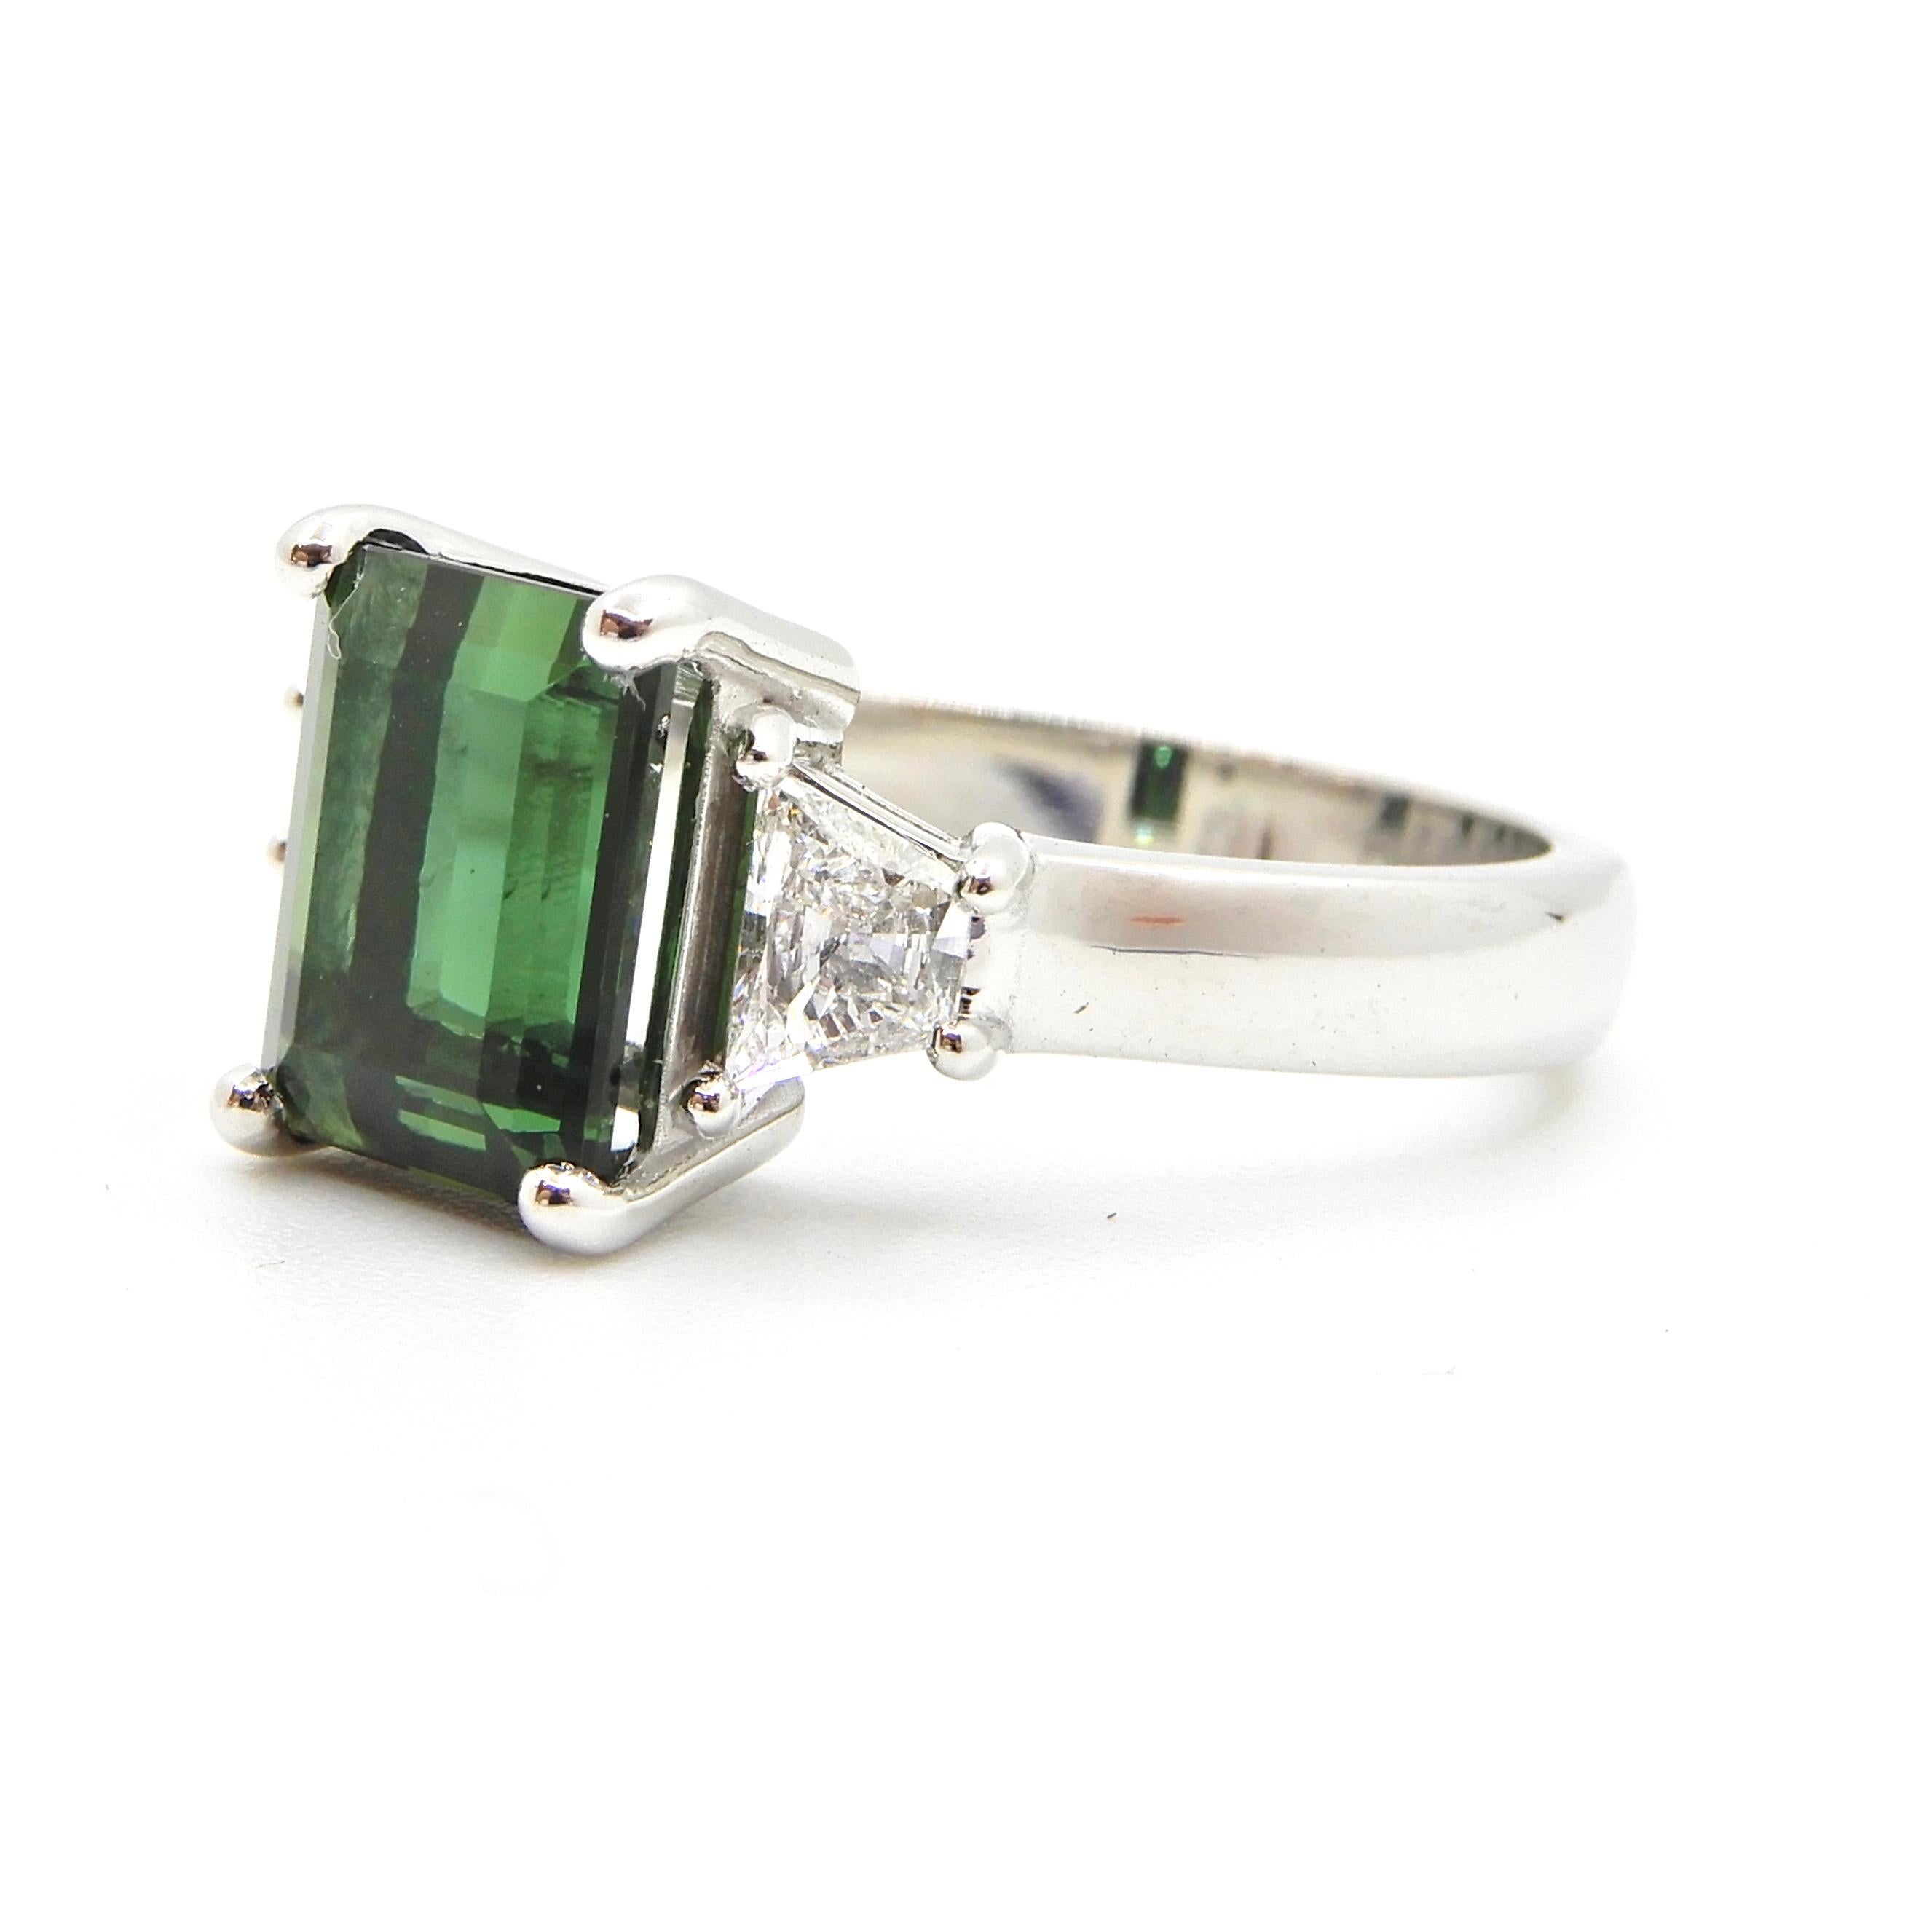 Emerald Cut 2.86 Carat Green Tourmaline and Diamond Cocktail Ring